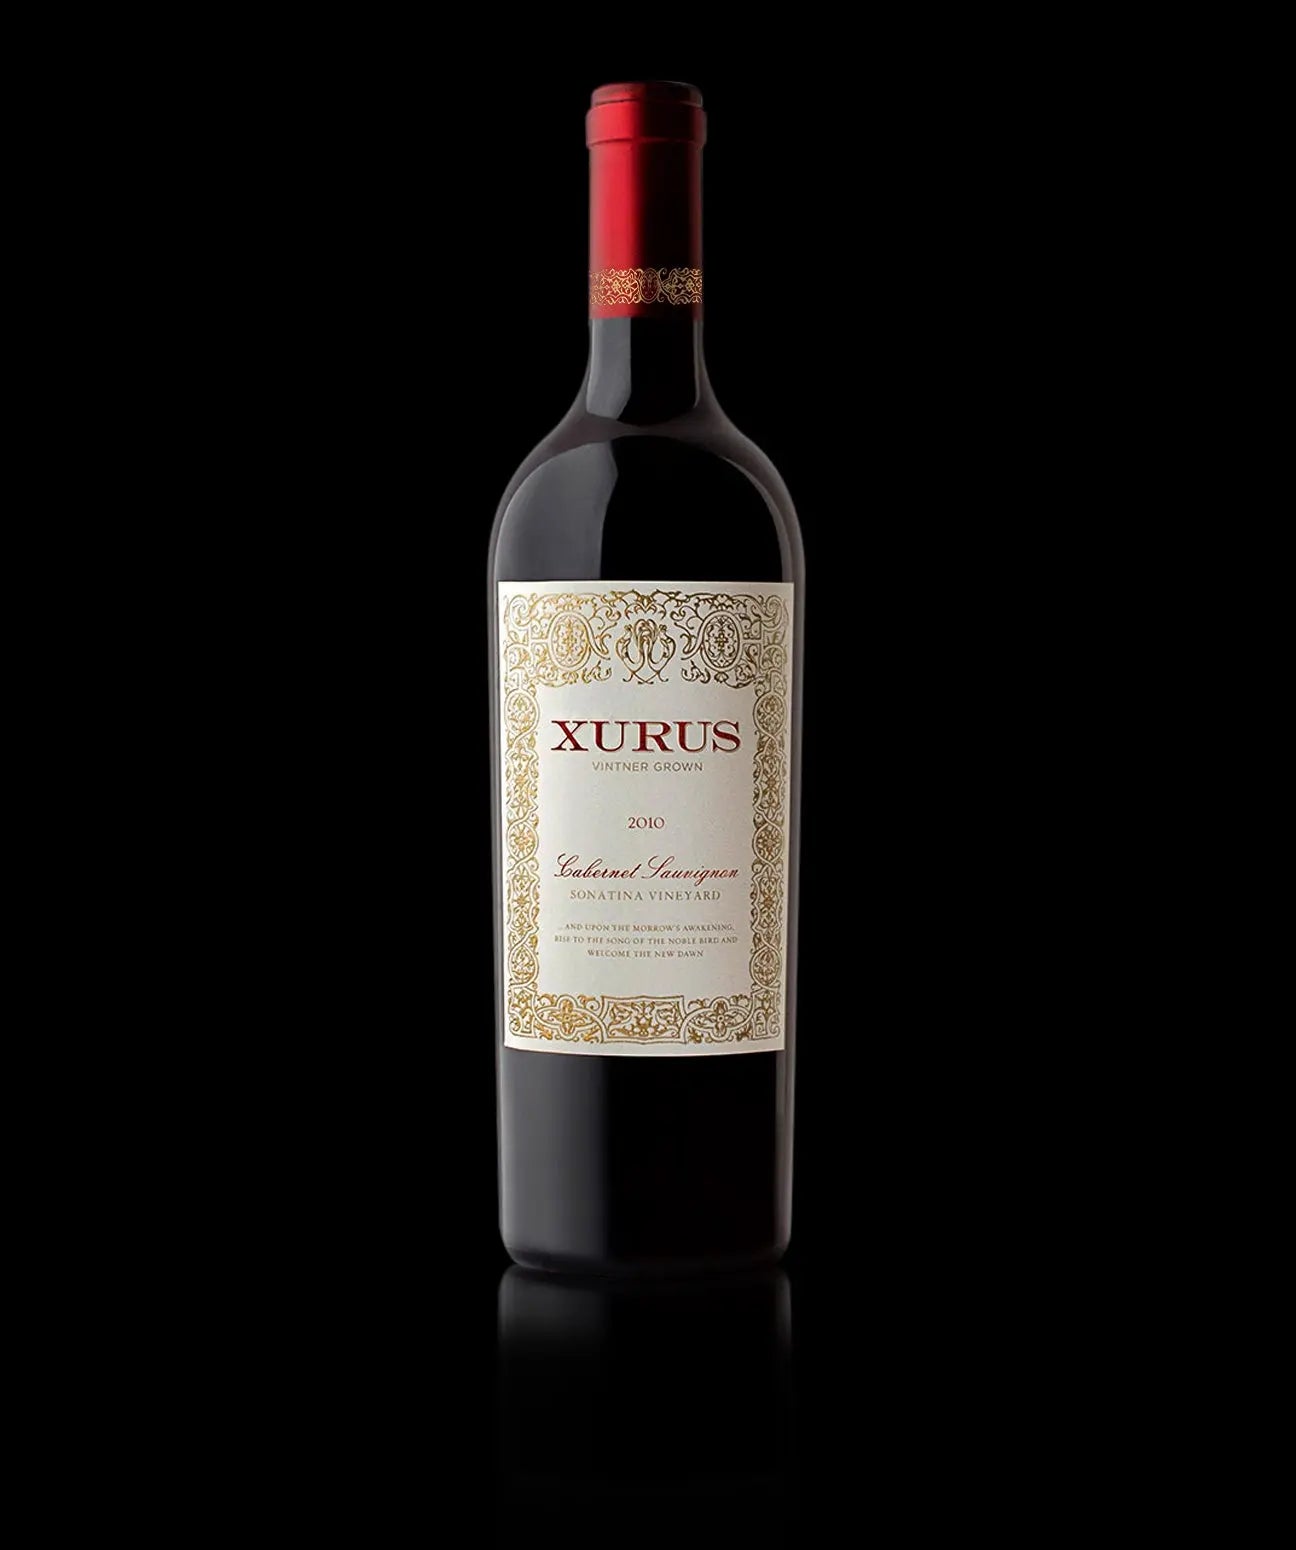 Image of a Xurus Cabernet Sauvignon 2010 bottle.